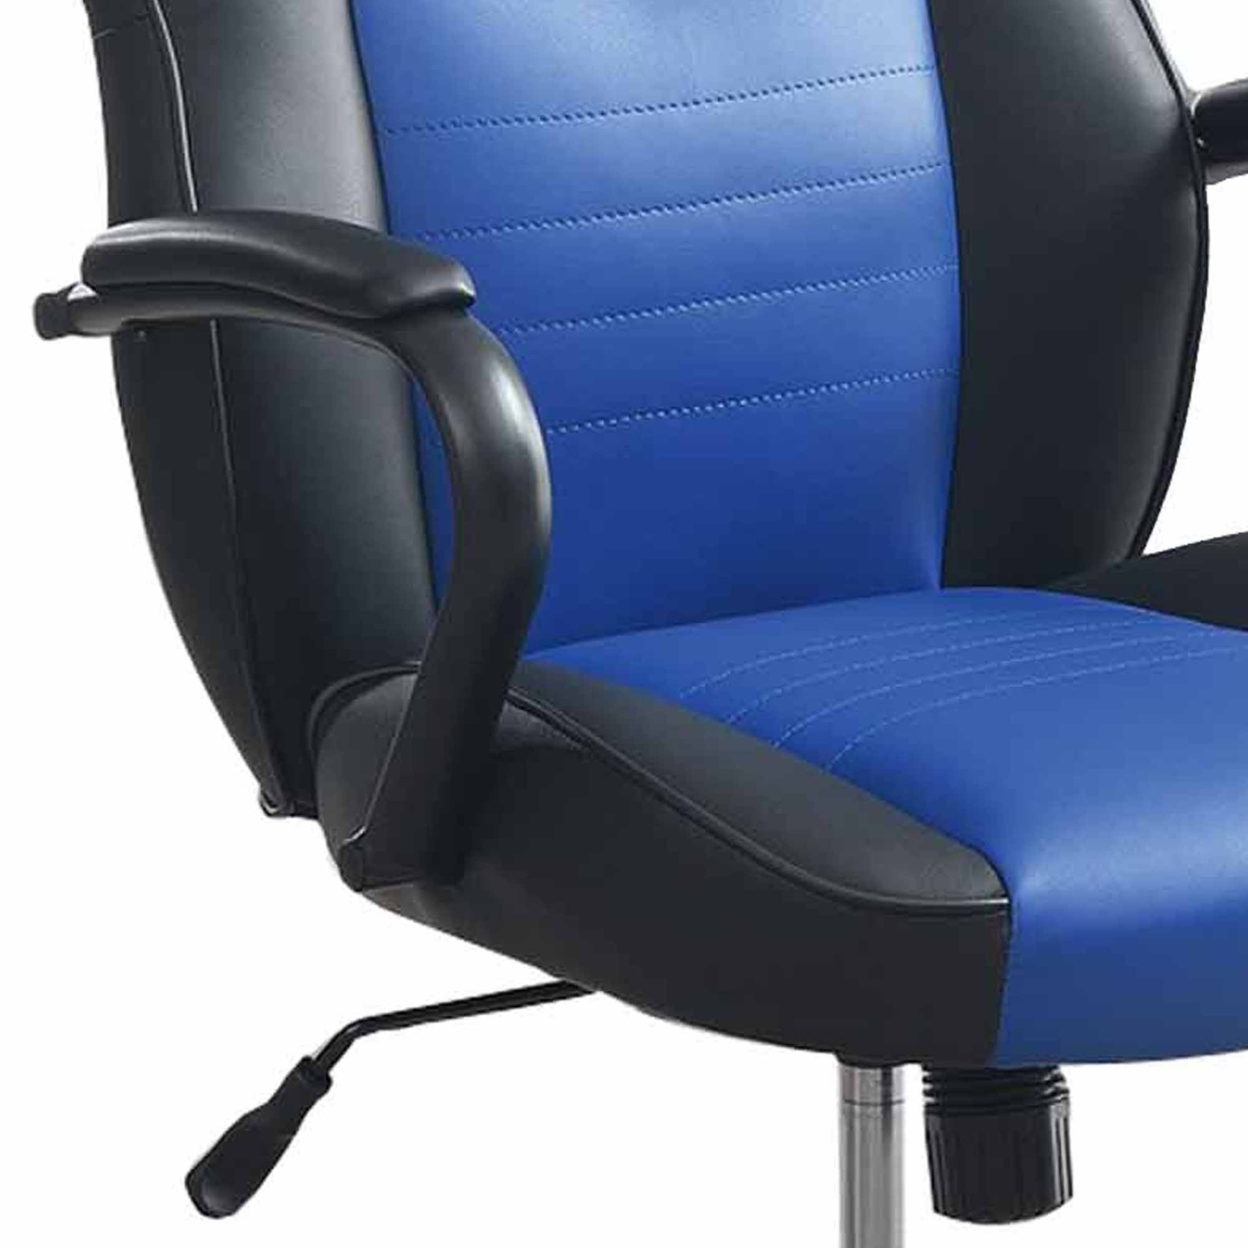 Rue 27 Inch Ergonomic Office Chair, Faux Leather Swivel Seat, Black, Blue- Saltoro Sherpi